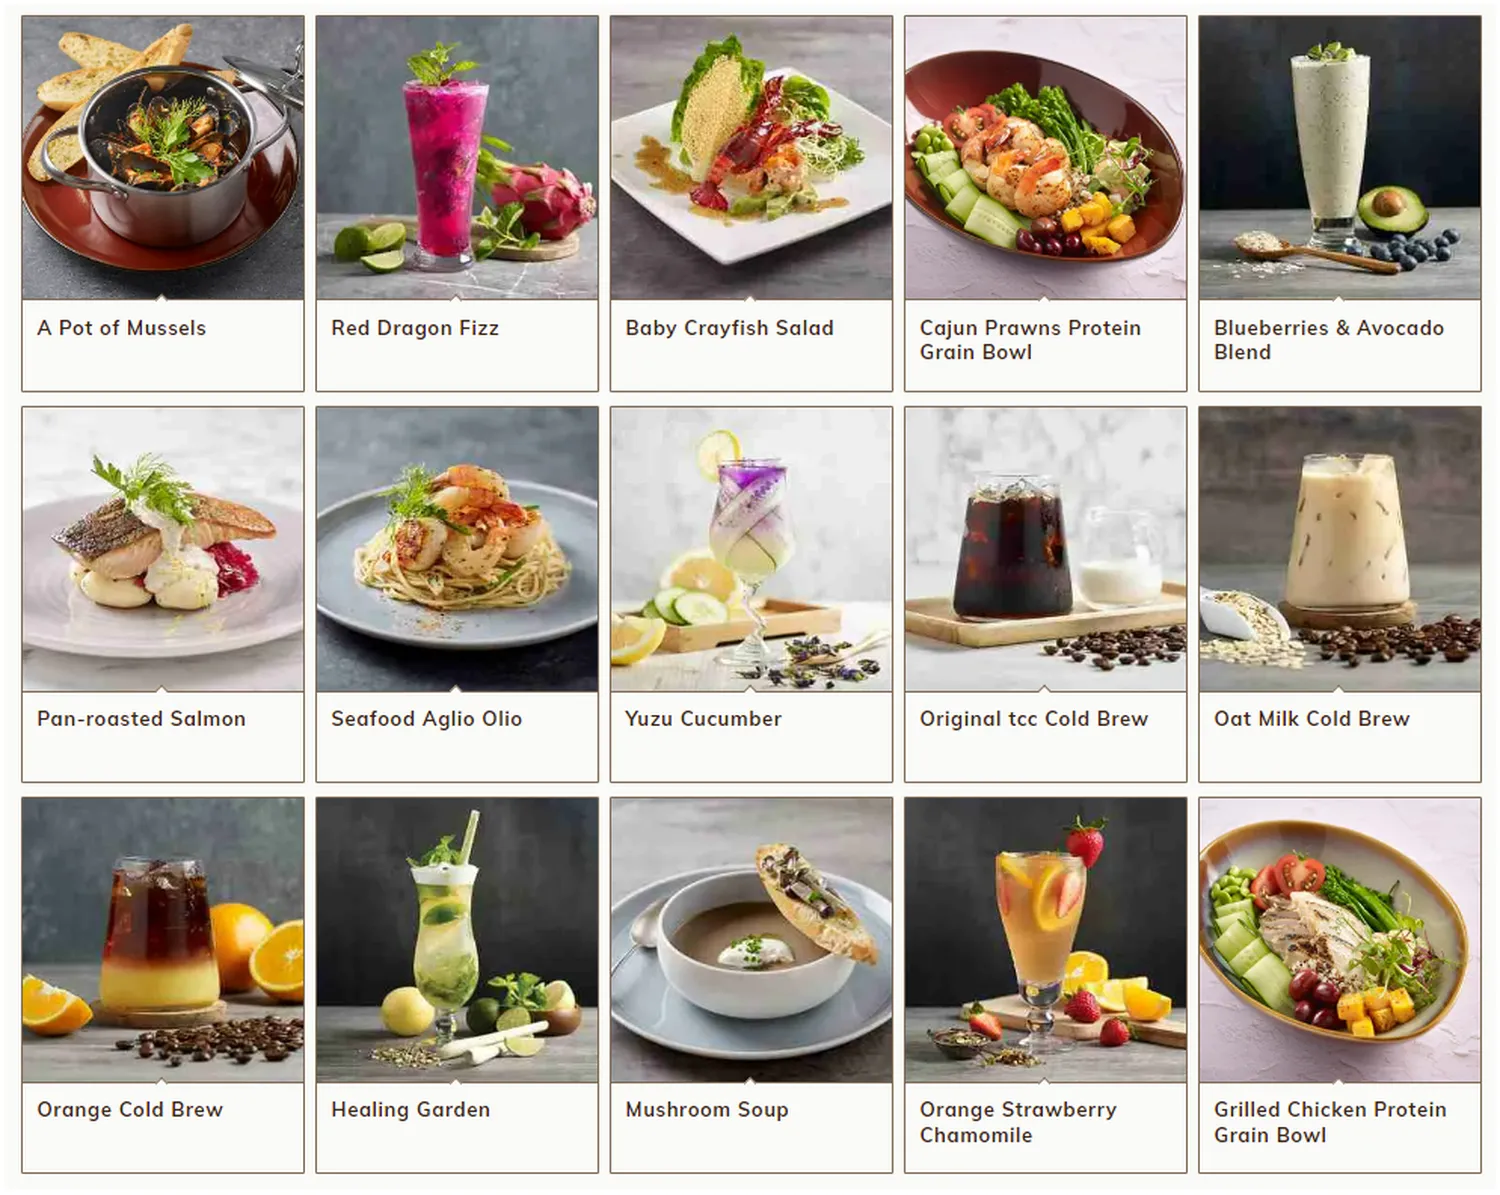 tcc menu singapore healthier choice food beverage